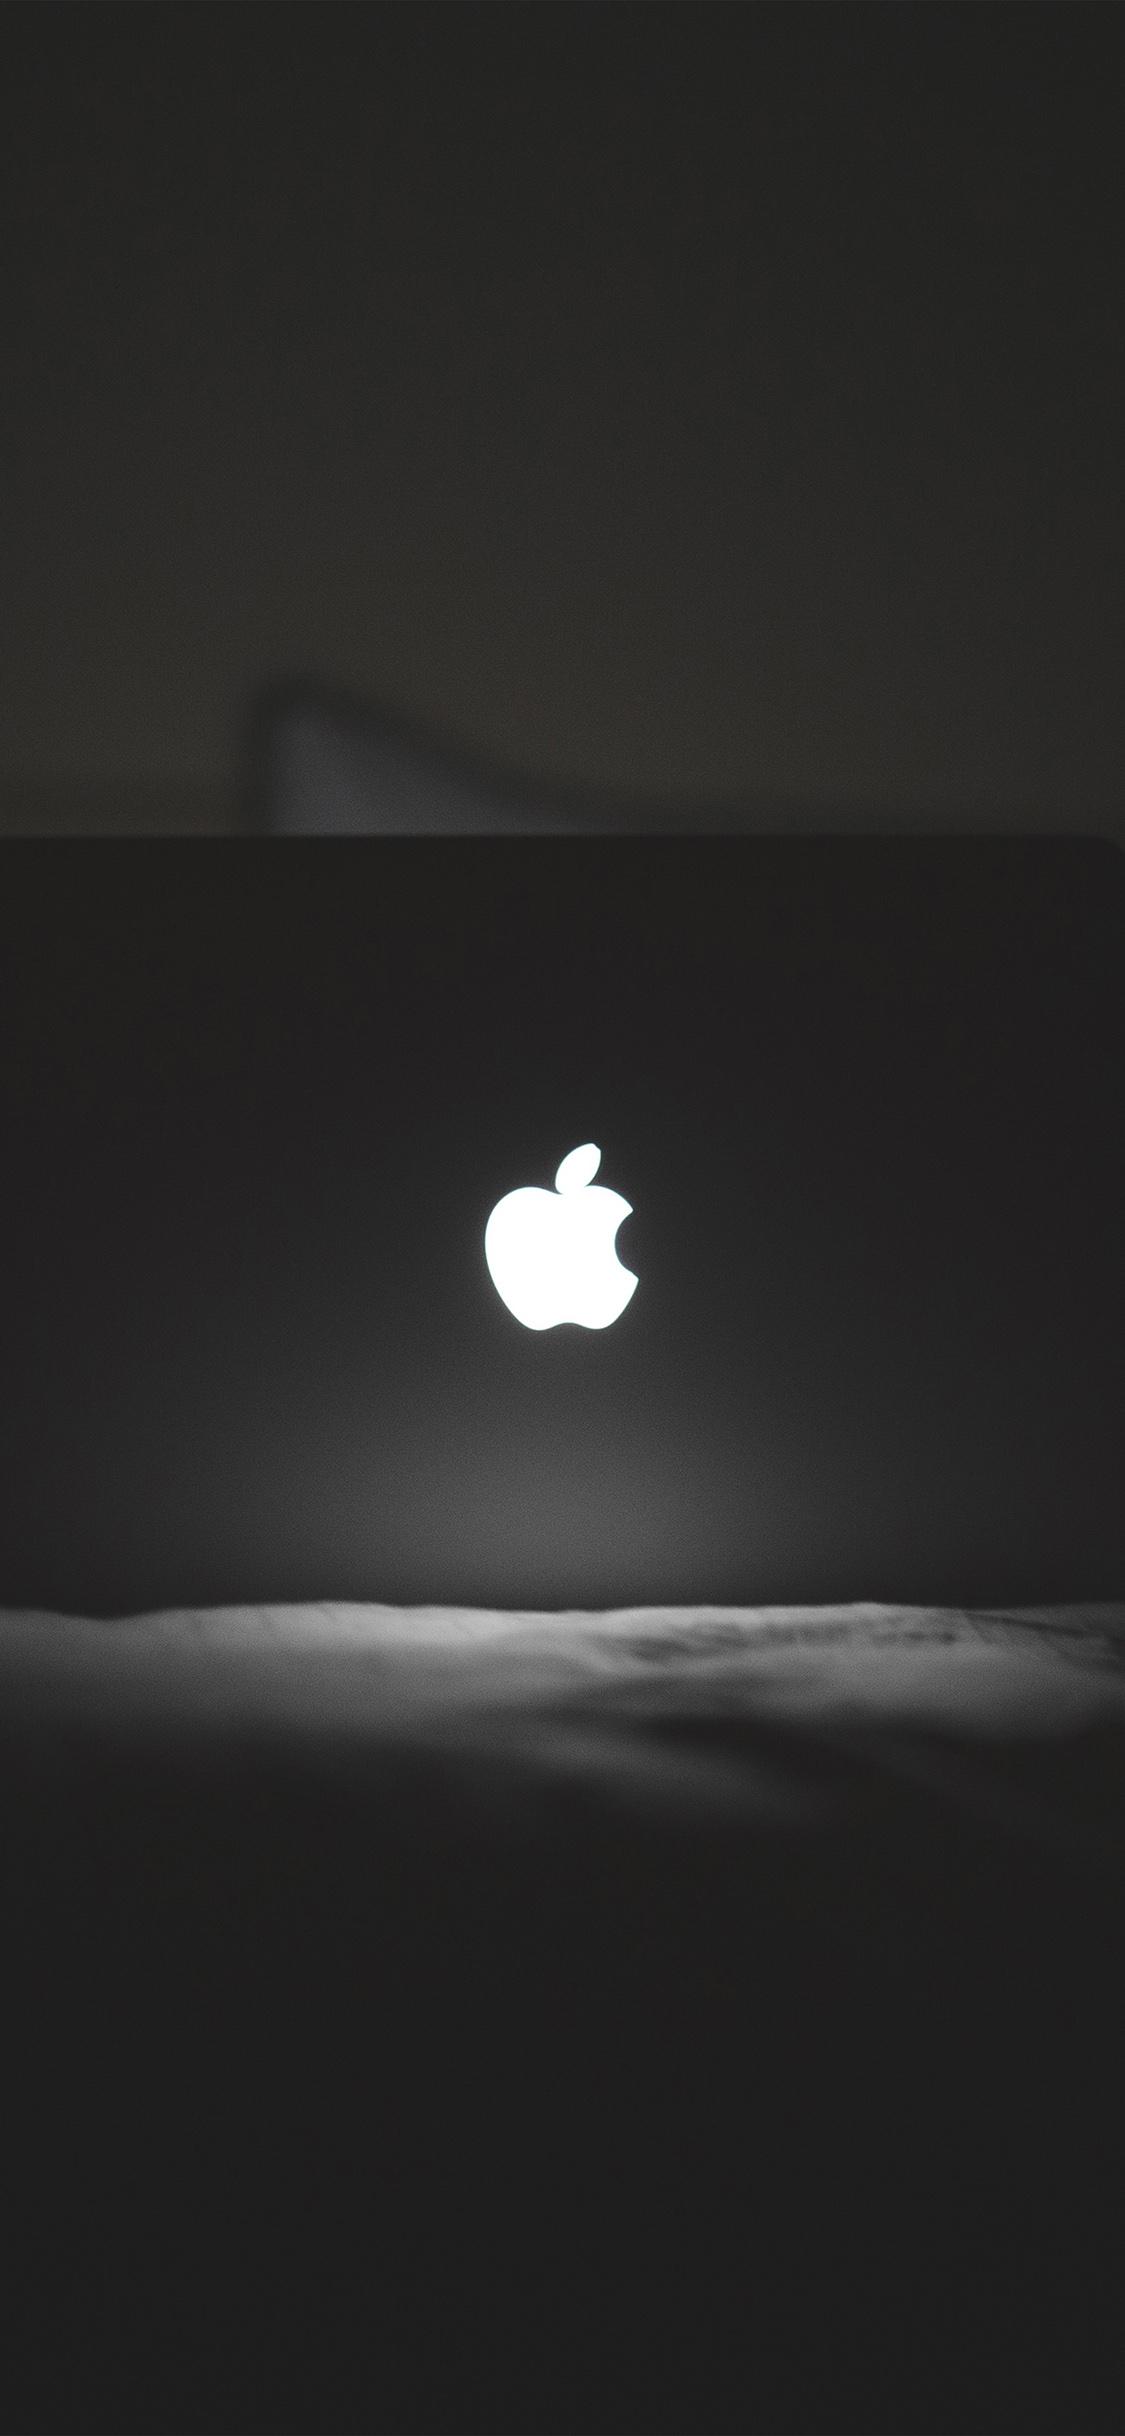 iPhone X wallpaper. apple logo dark bw